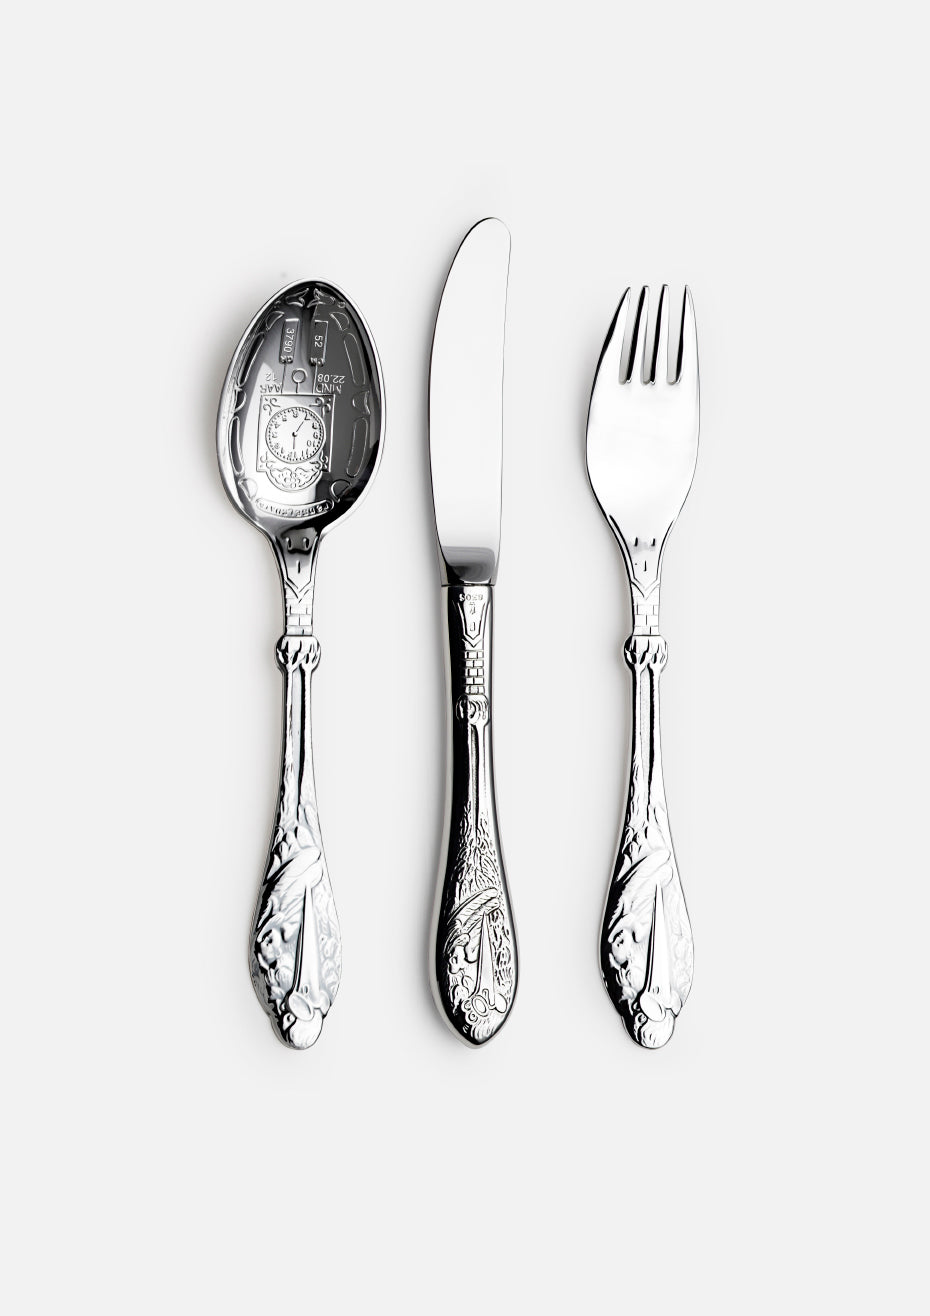 Stork spoon, knife and fork set